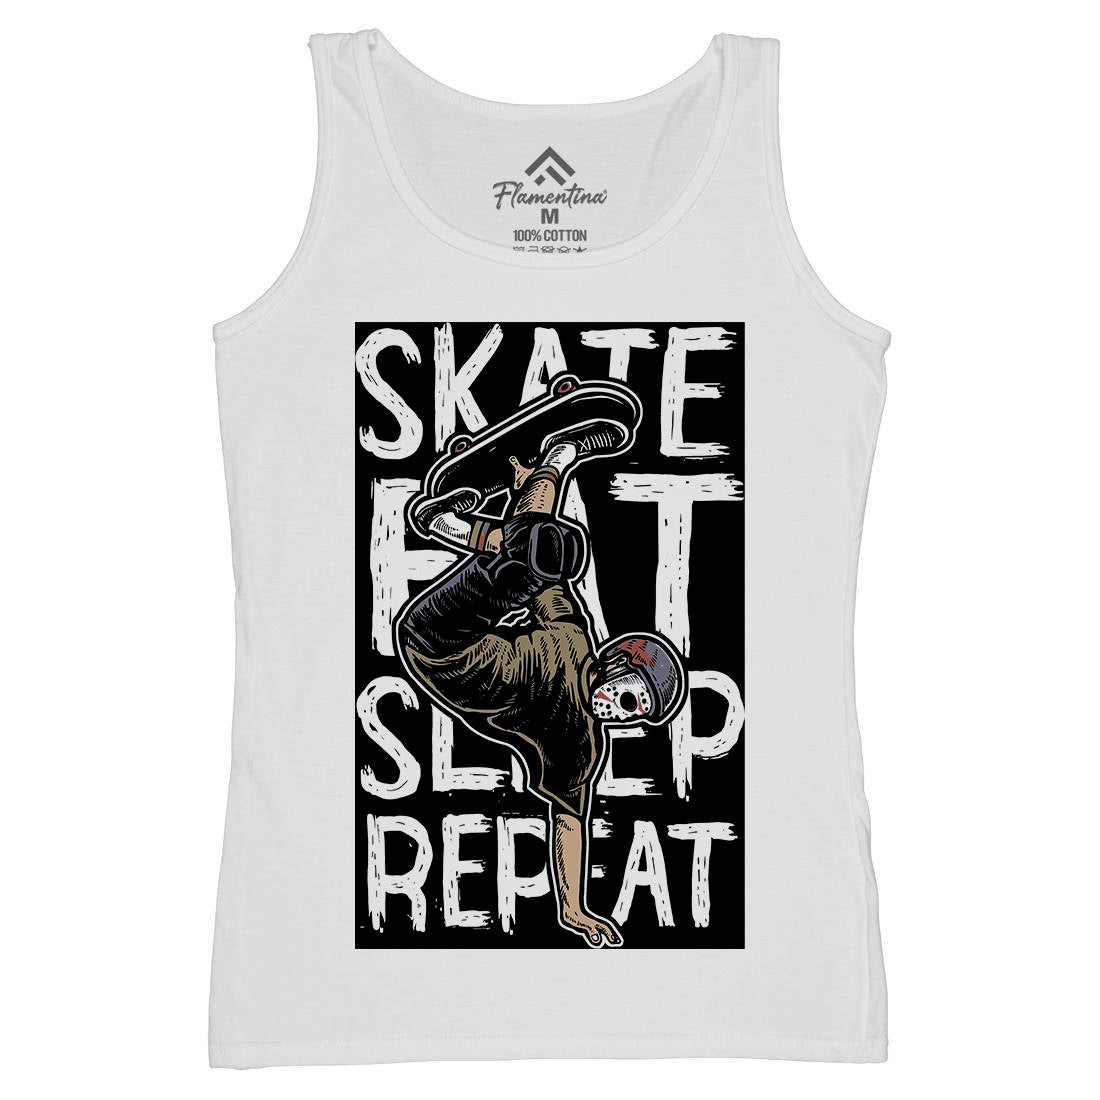 Eat Sleep Repeat Womens Organic Tank Top Vest Skate A572